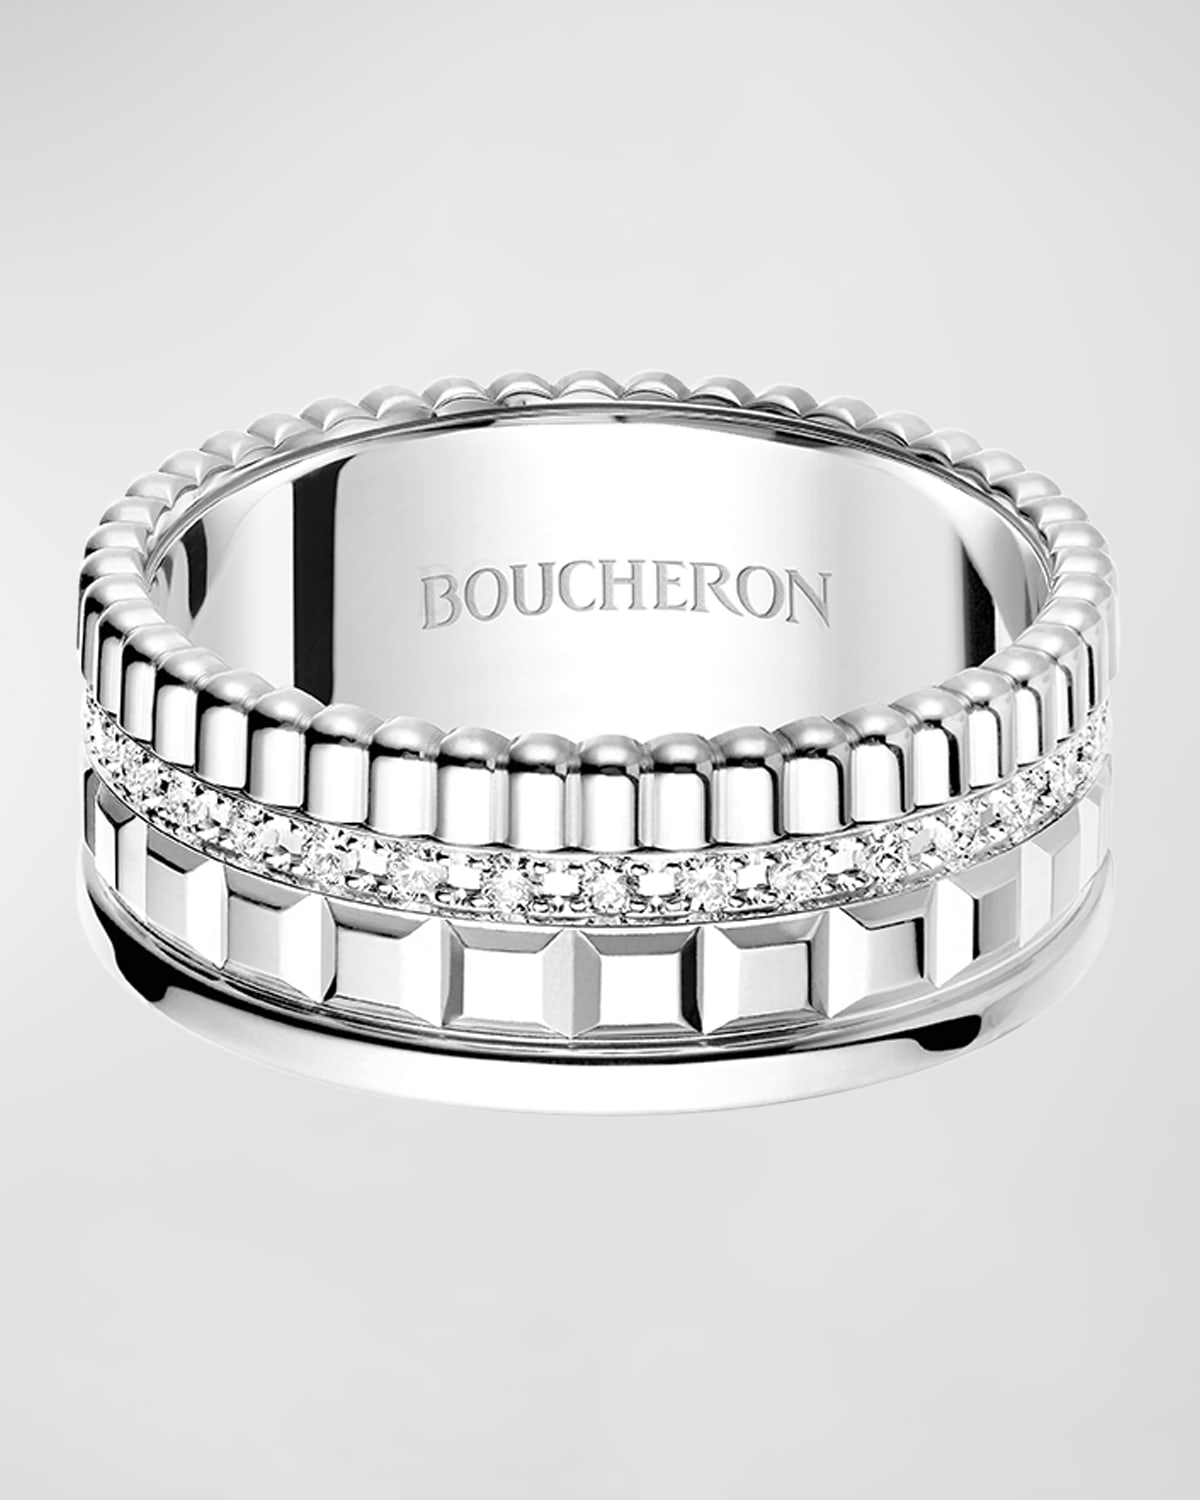 Boucheron Quatre Radiant 18K White Gold Band Ring with Diamonds, Size 52